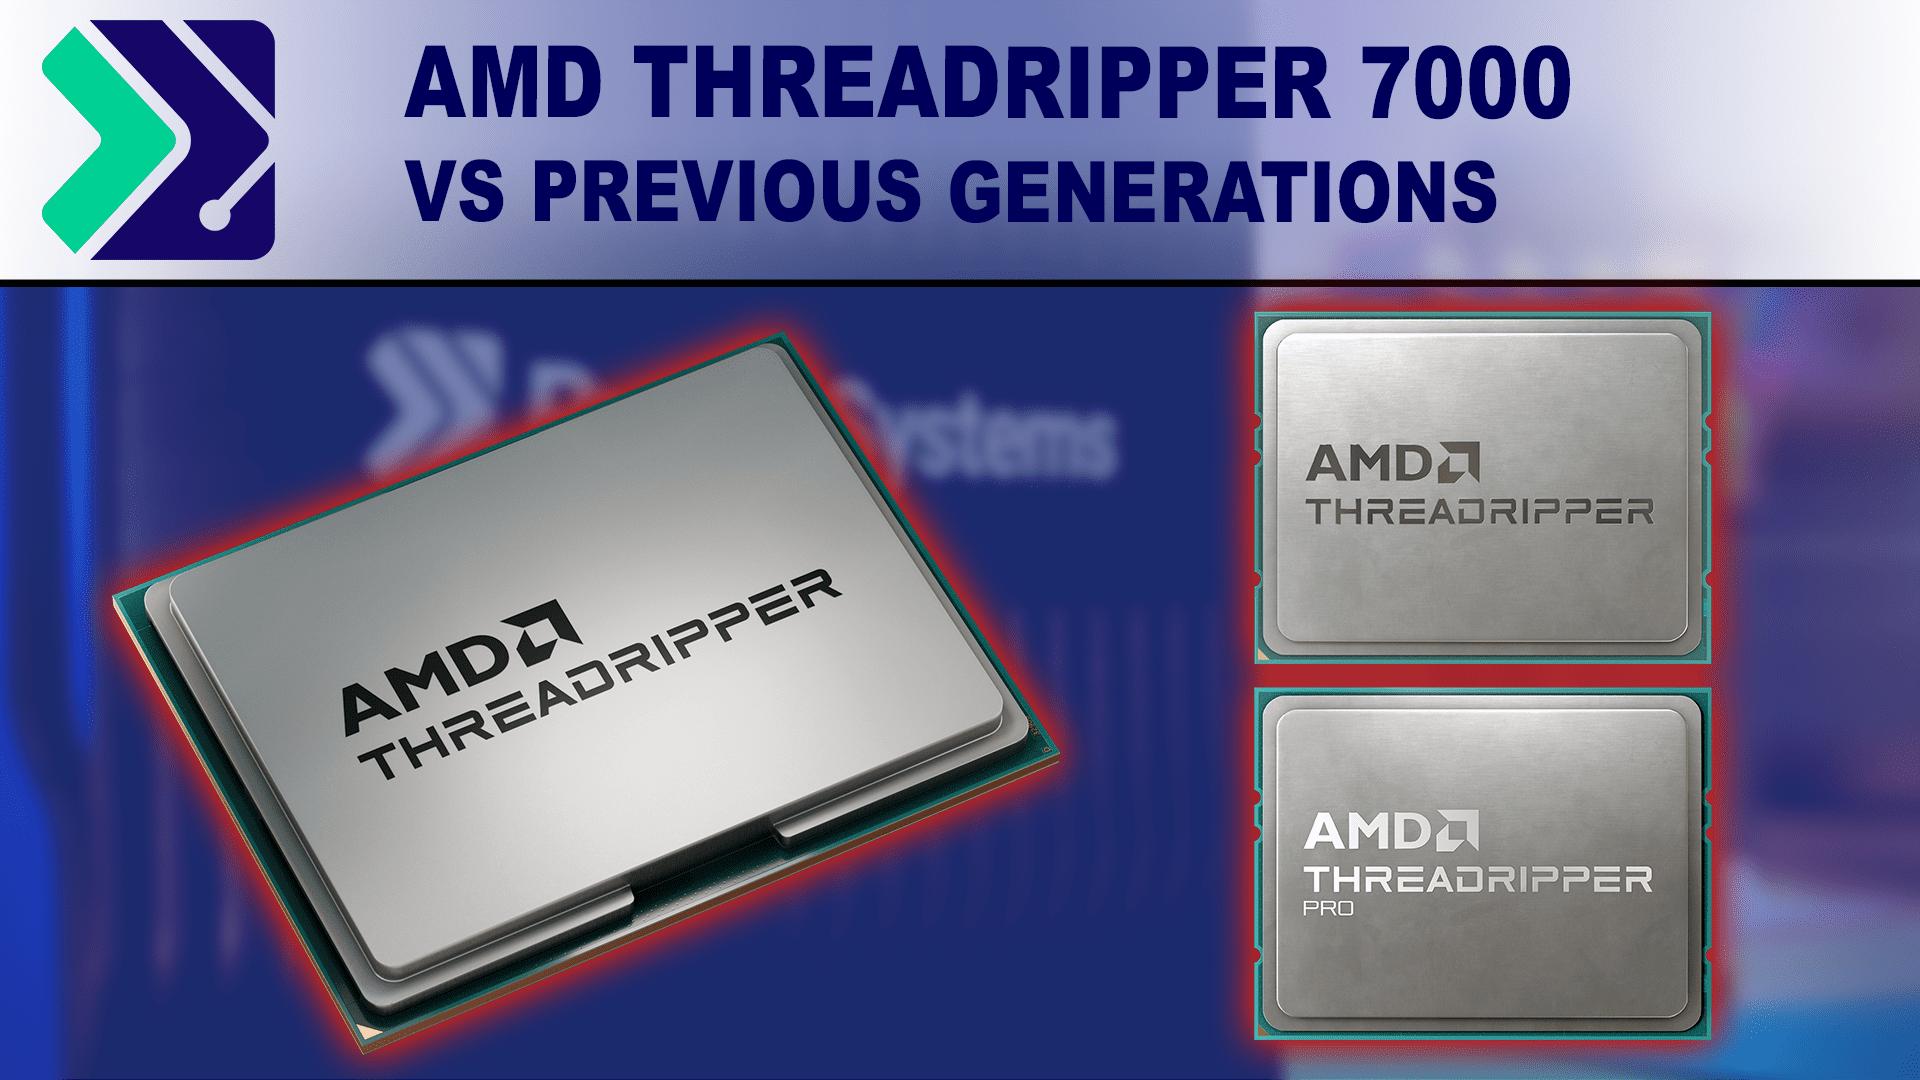 AMD Threadripper 7000 versus previous generations